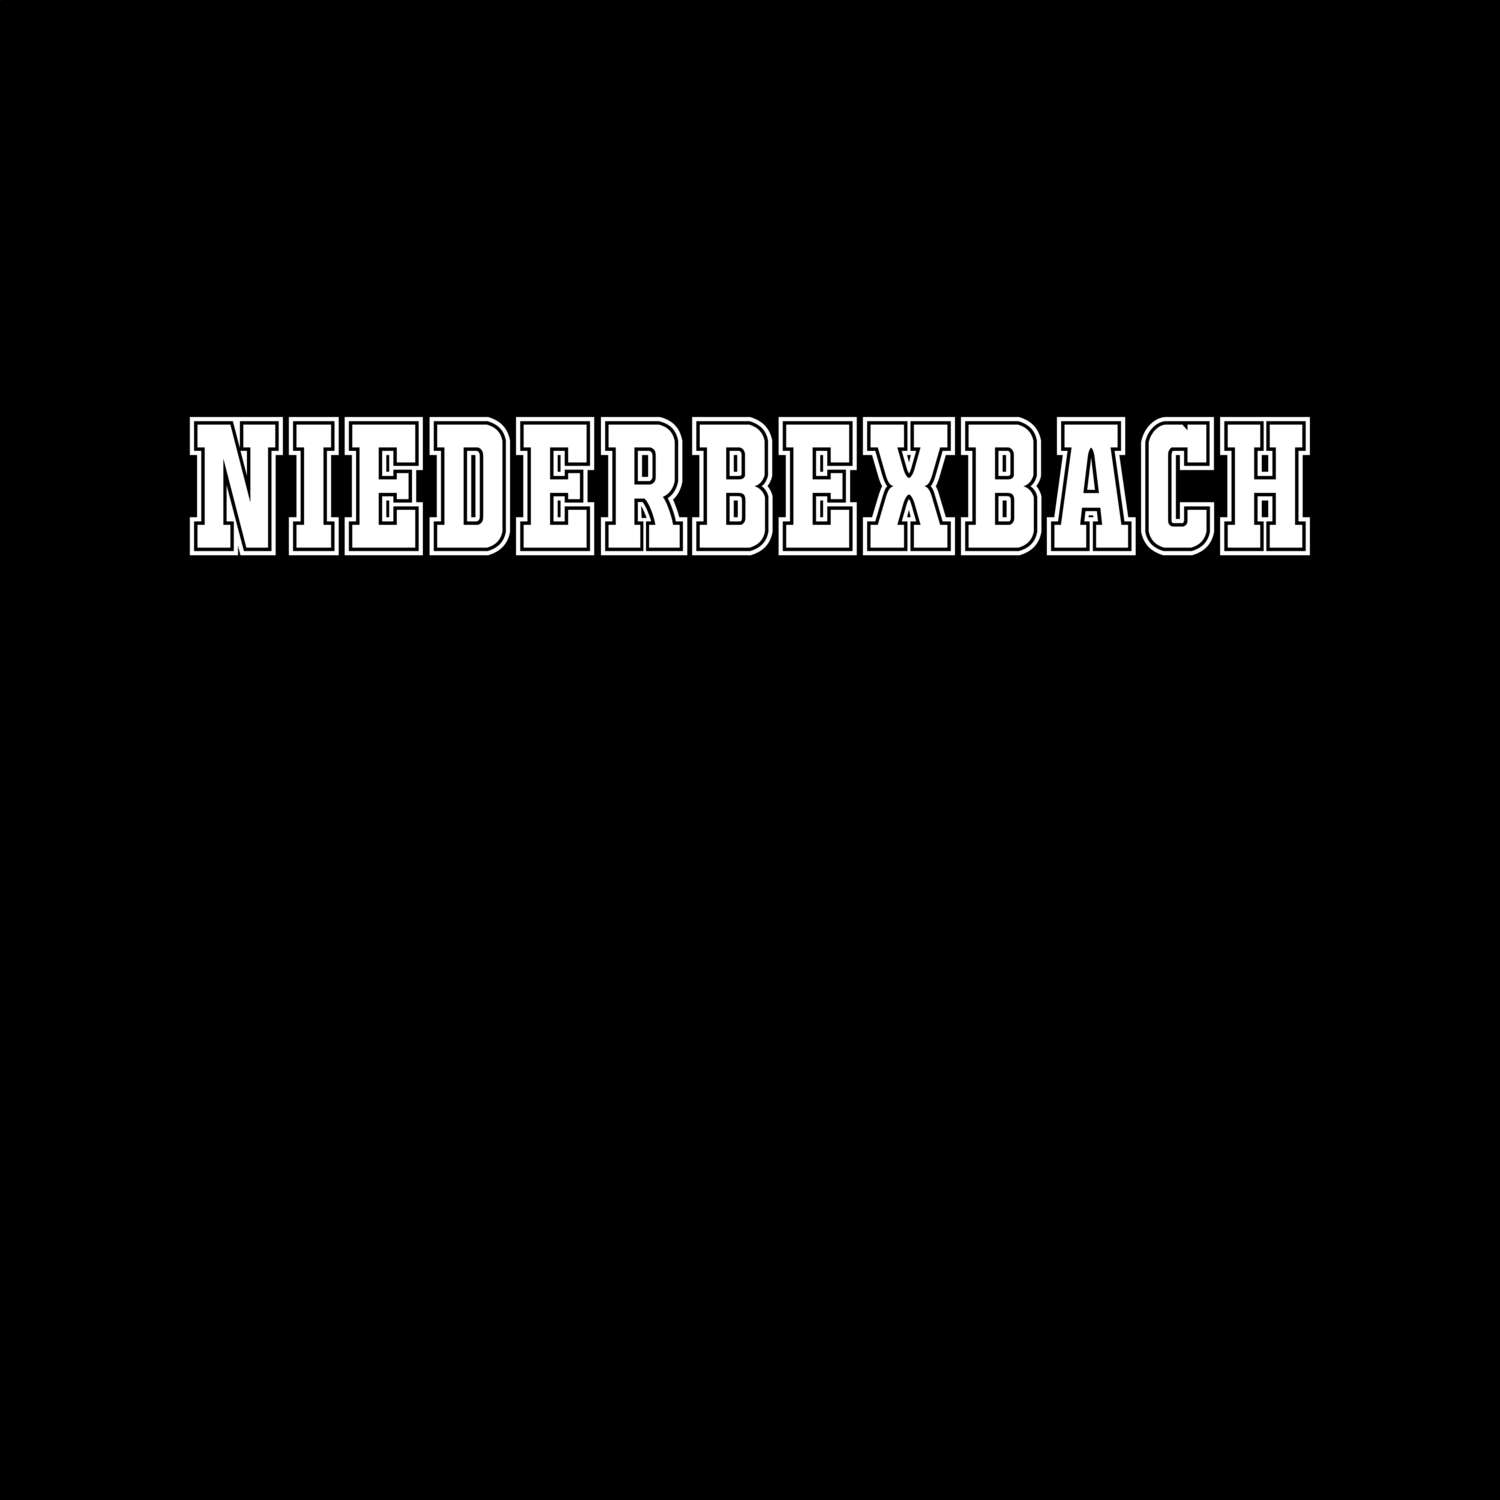 Niederbexbach T-Shirt »Classic«